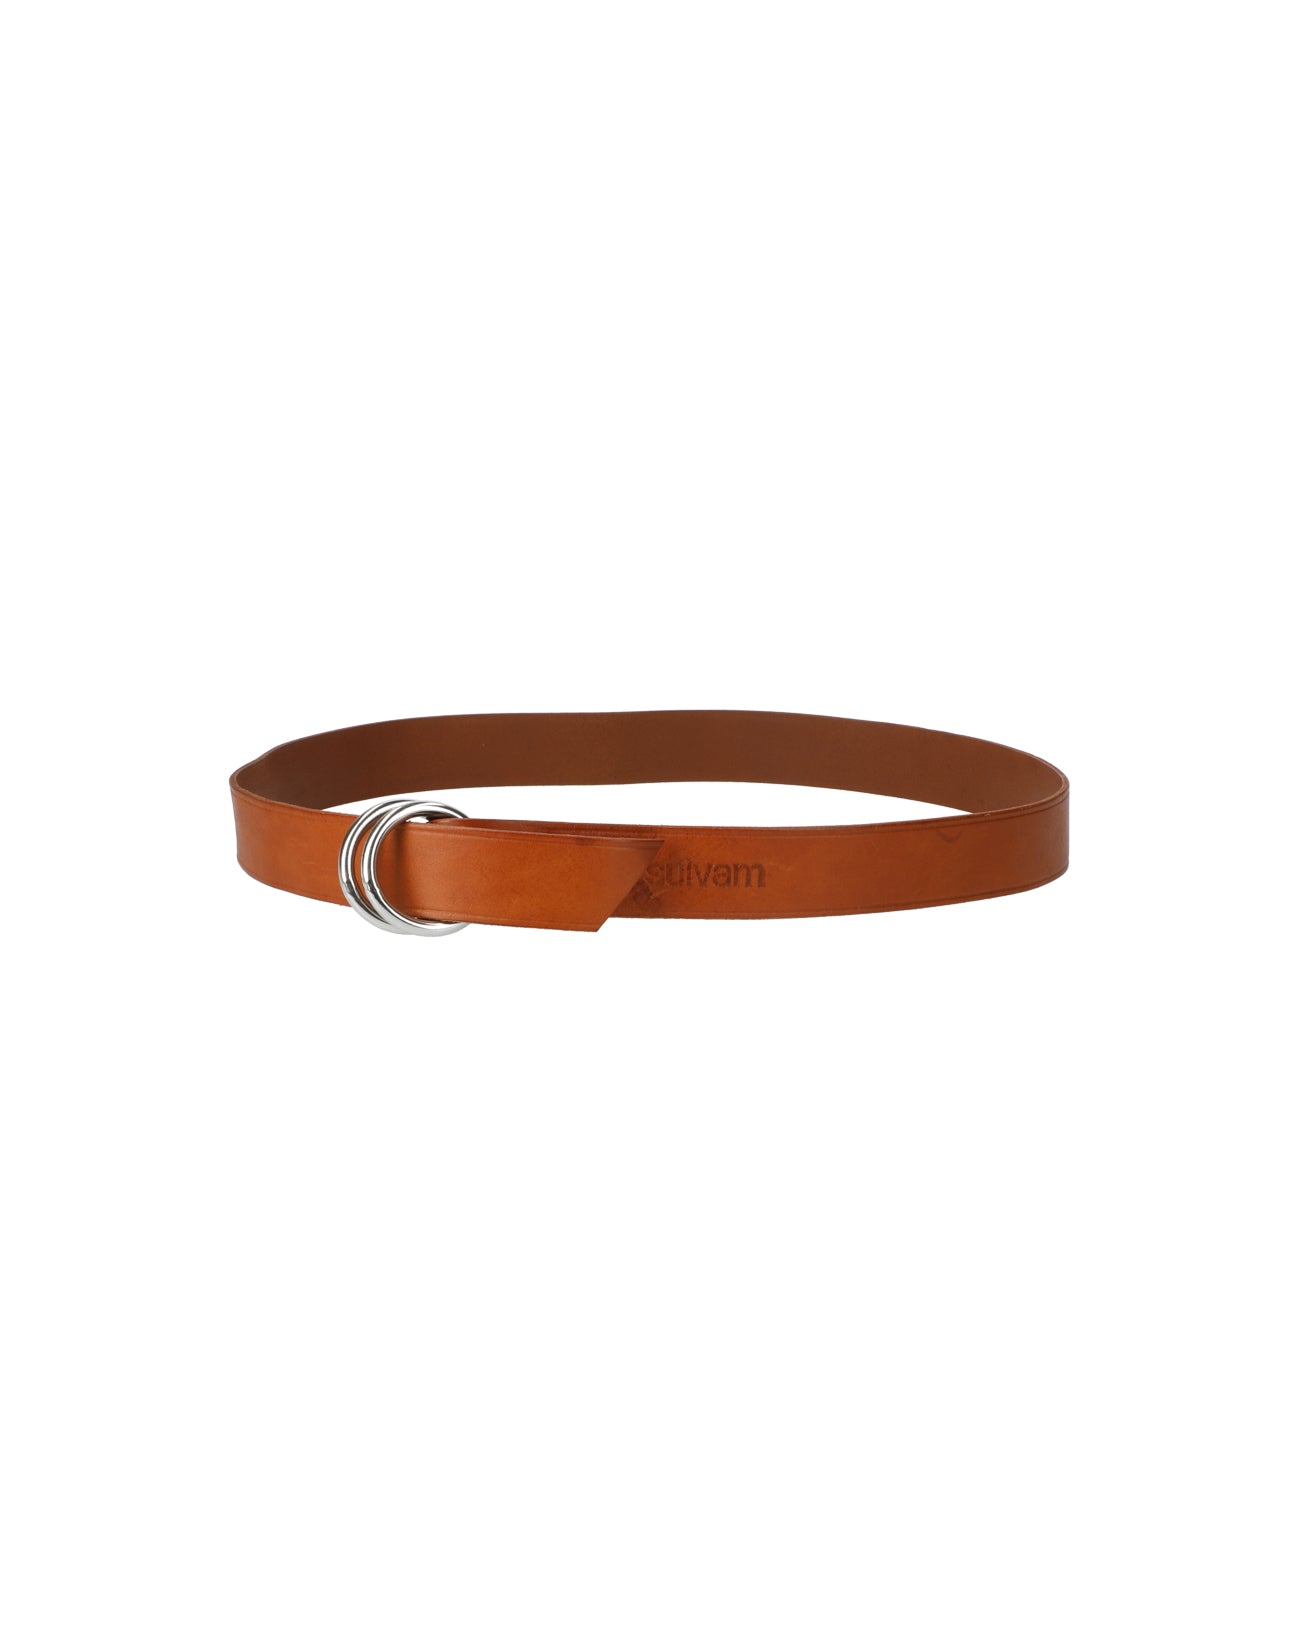 Ring belt - brown - FAB4 ONLINE STORE